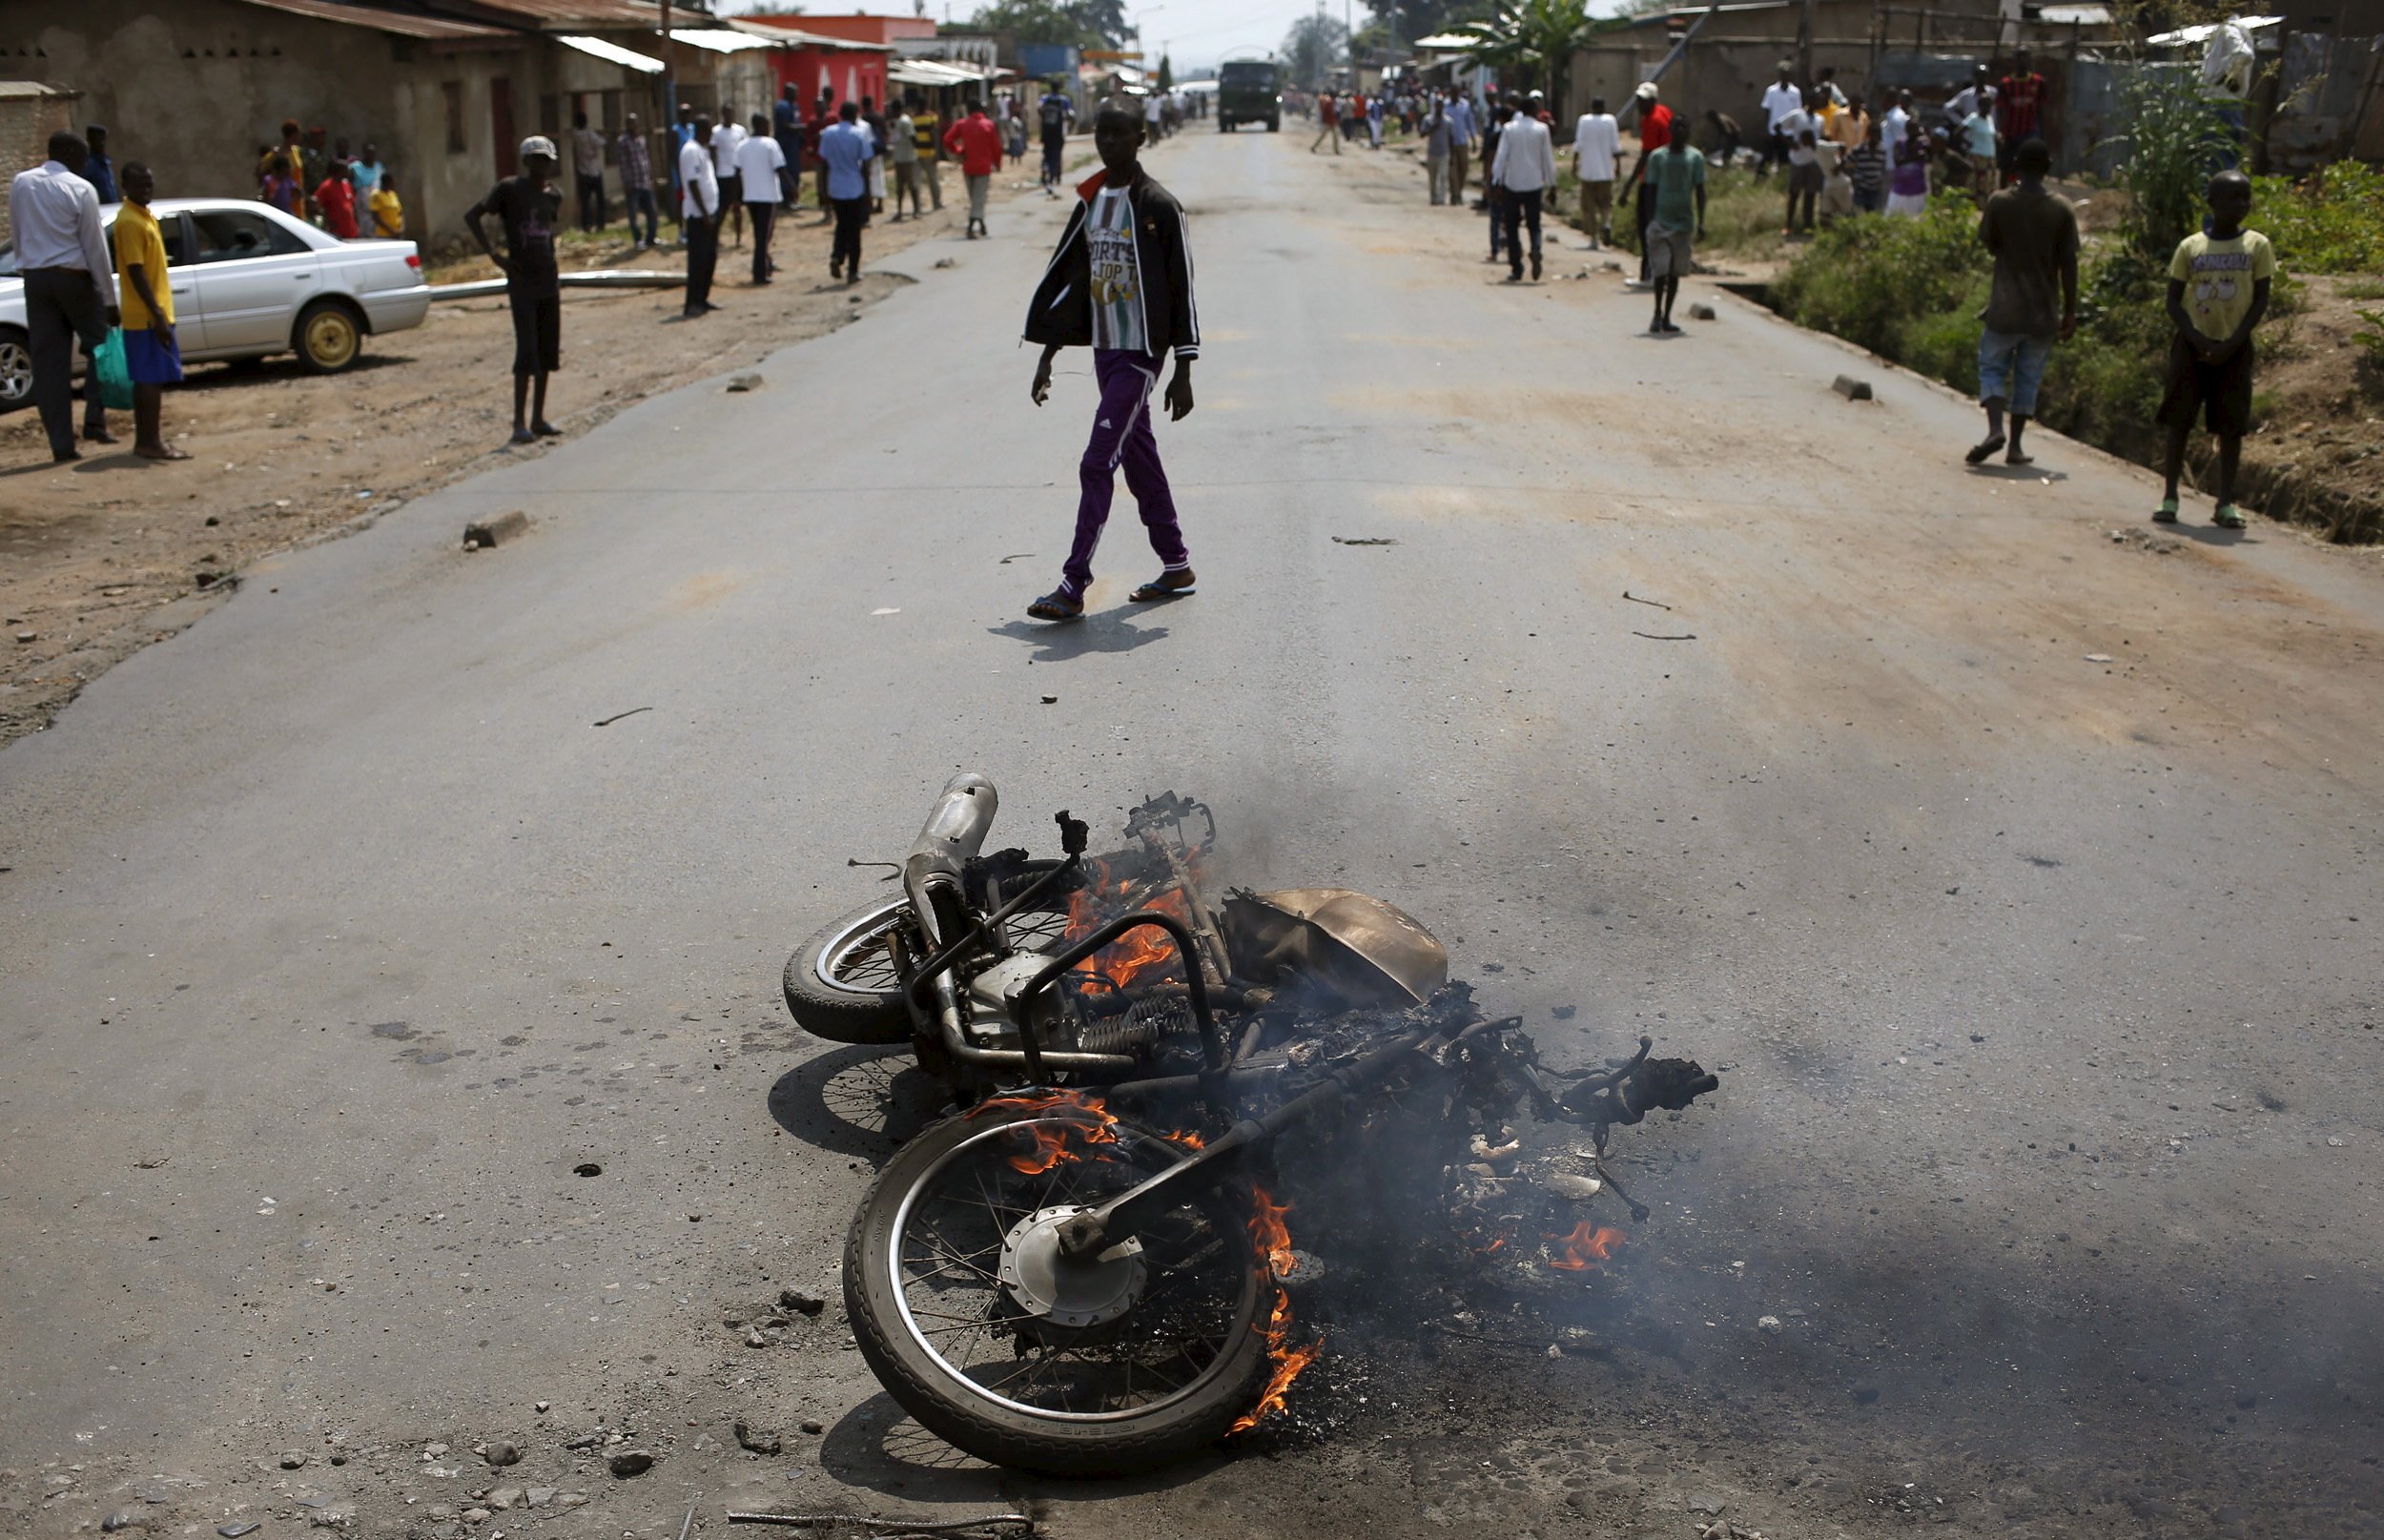 A motorbike is seen burning in Bujumbura, Burundi.